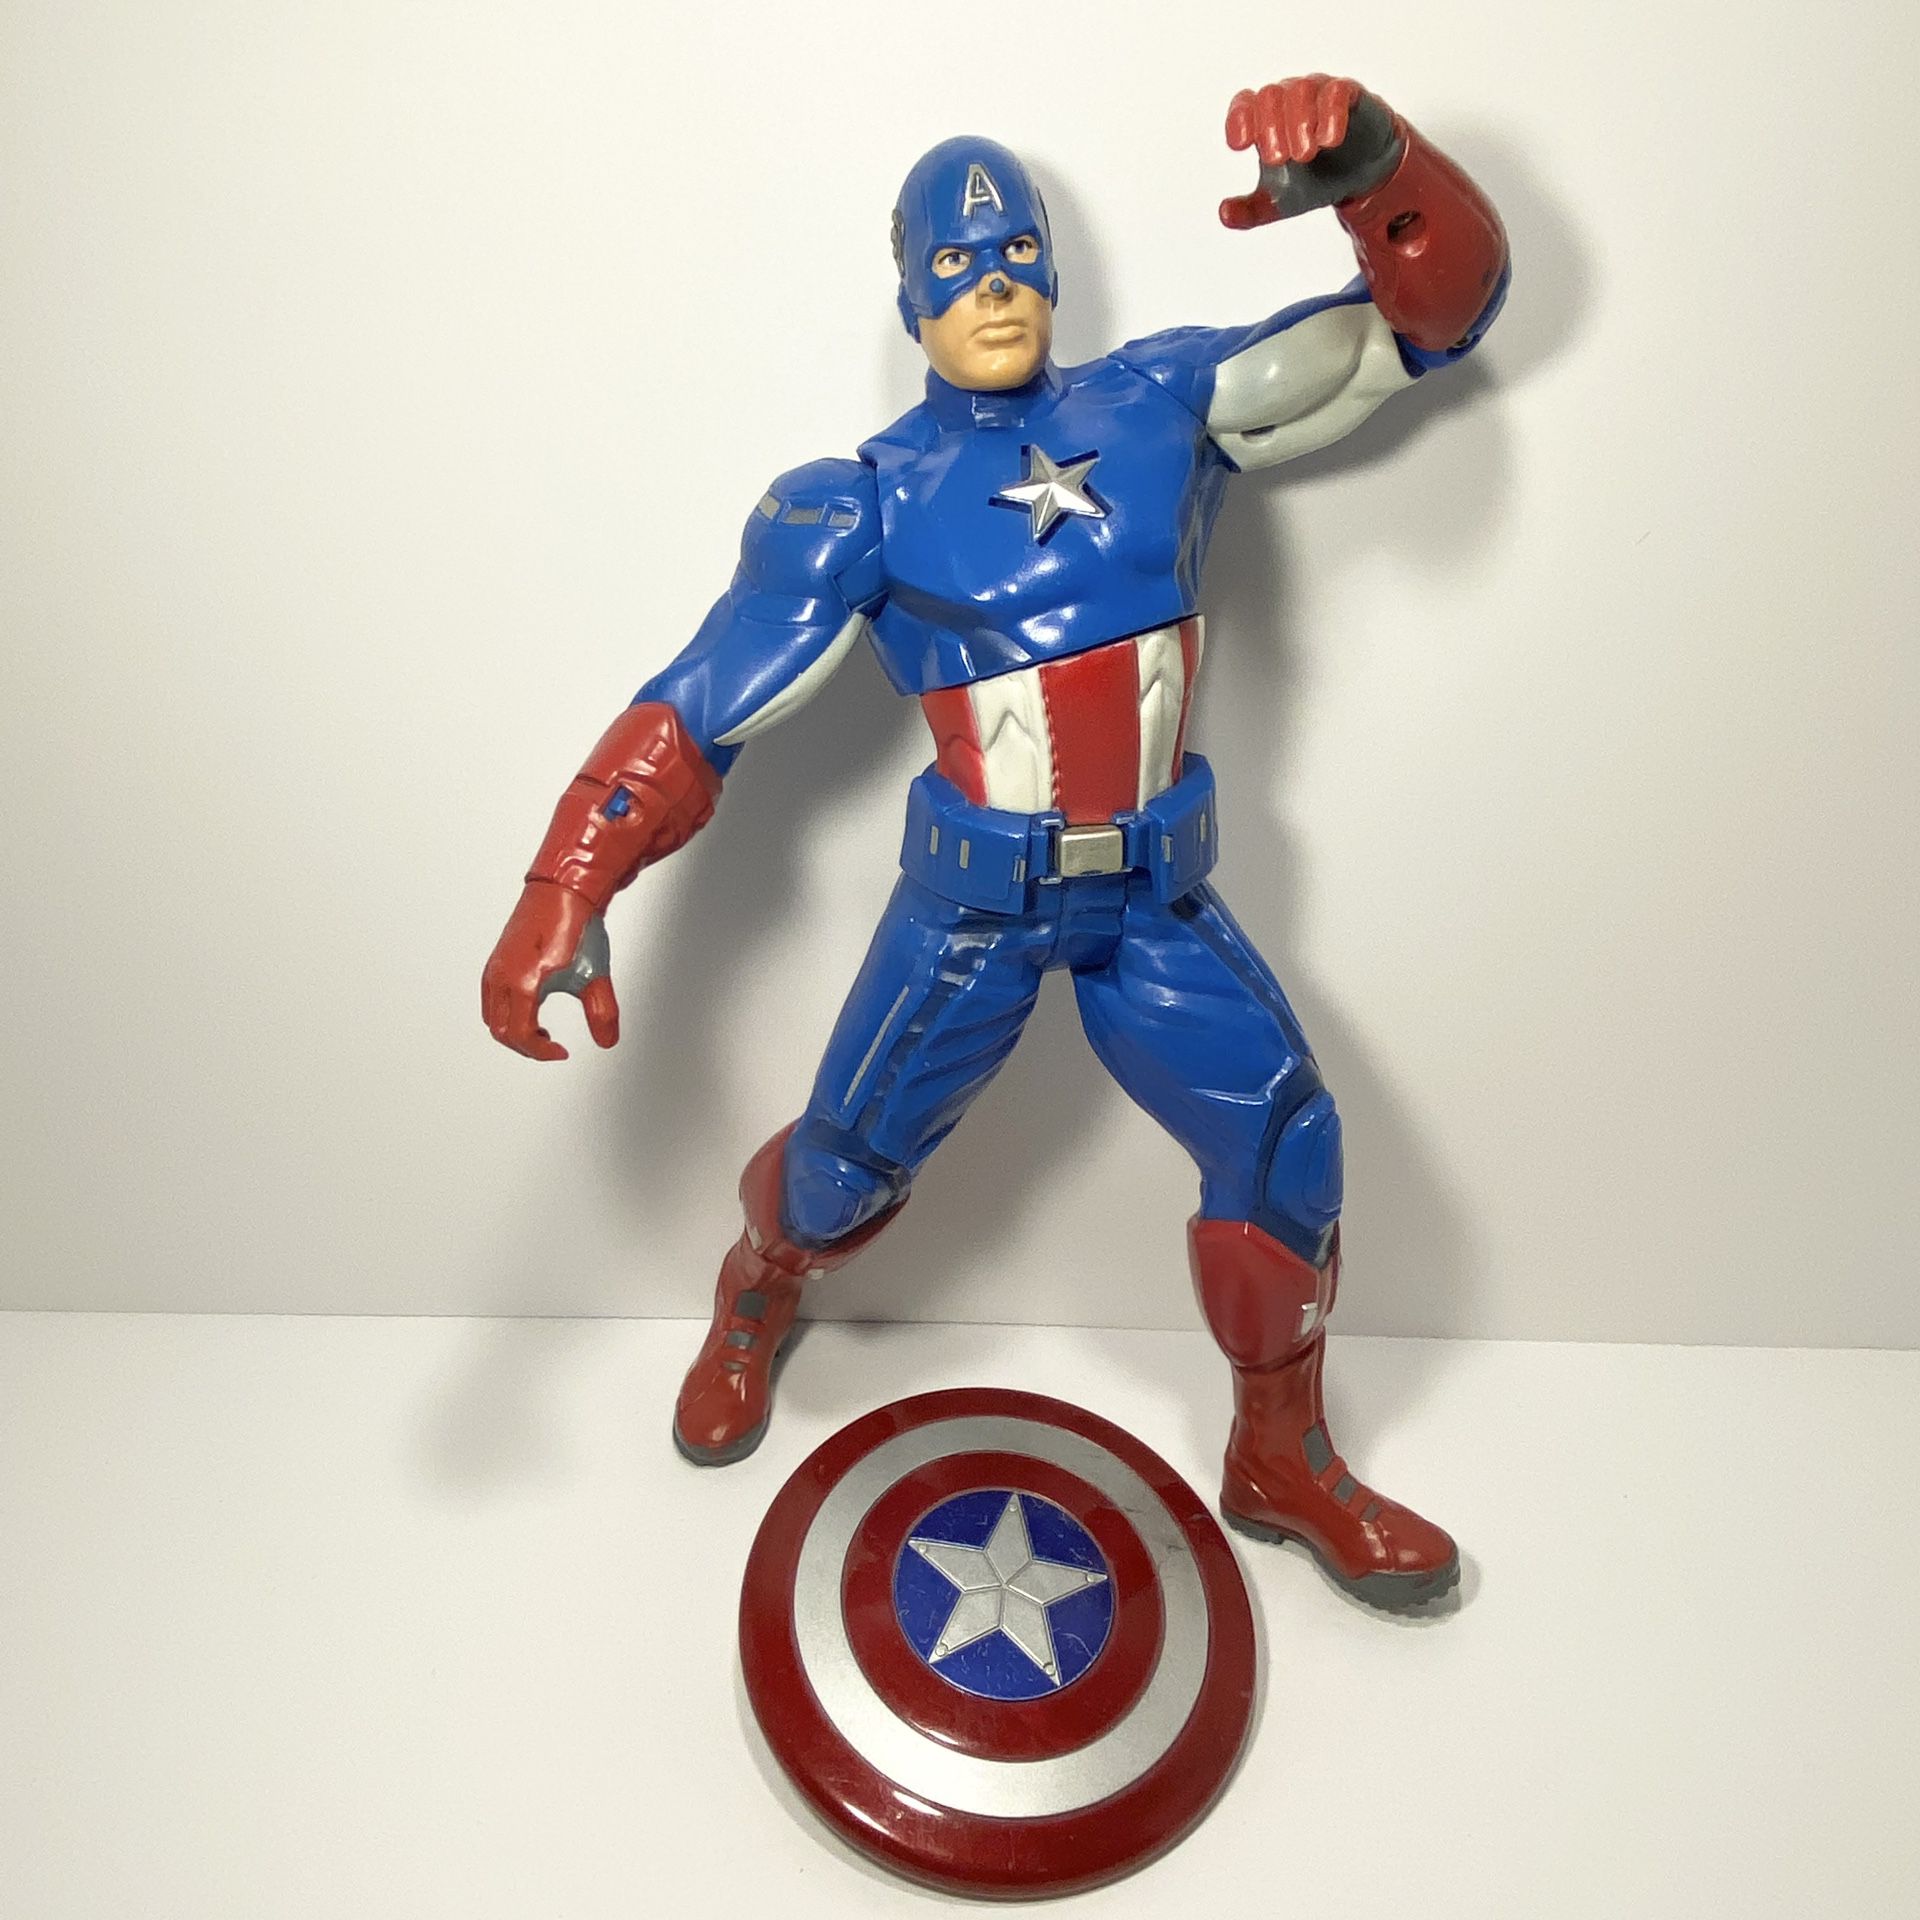 Marvel Captain America 10" Talking Action Figure - Tested Works